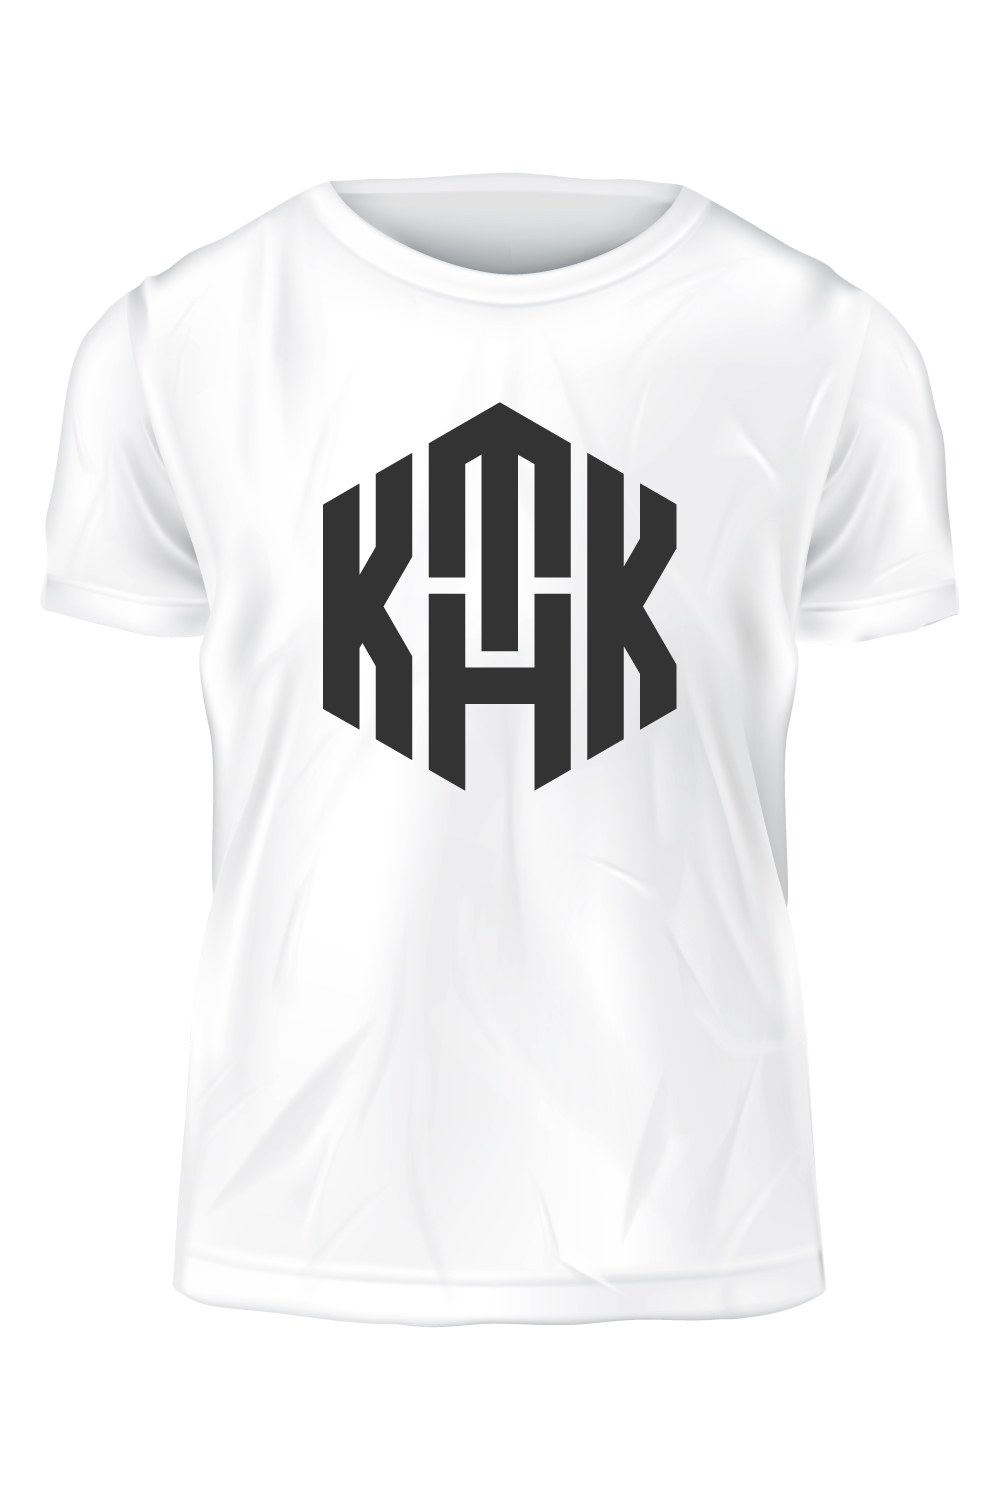 KTHK logo design pinterest preview image.